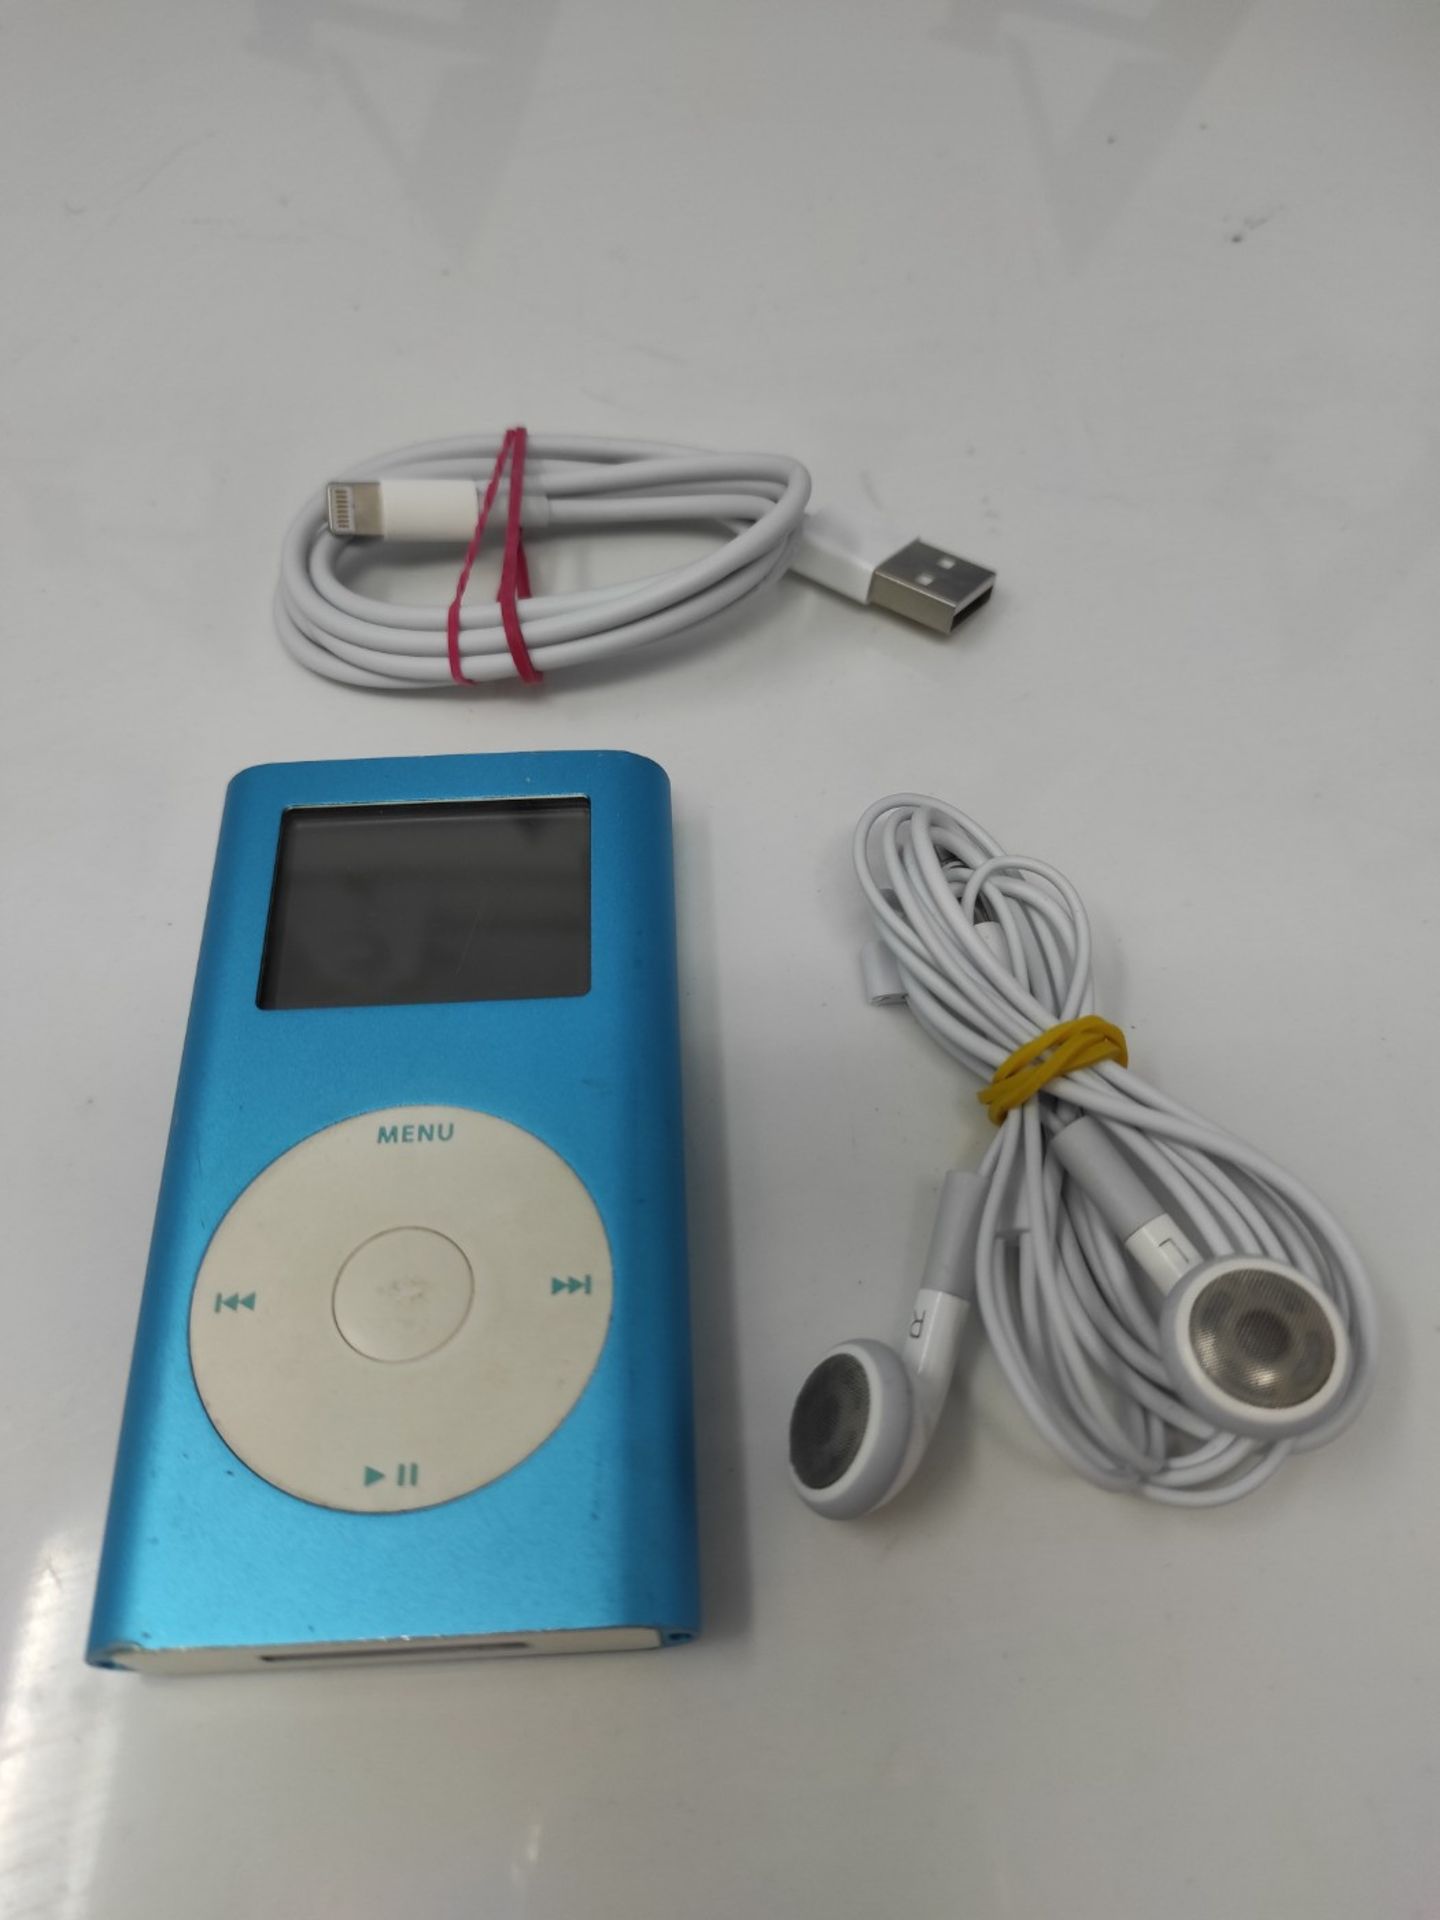 Apple iPod mini 4GB - Blue - Image 2 of 2